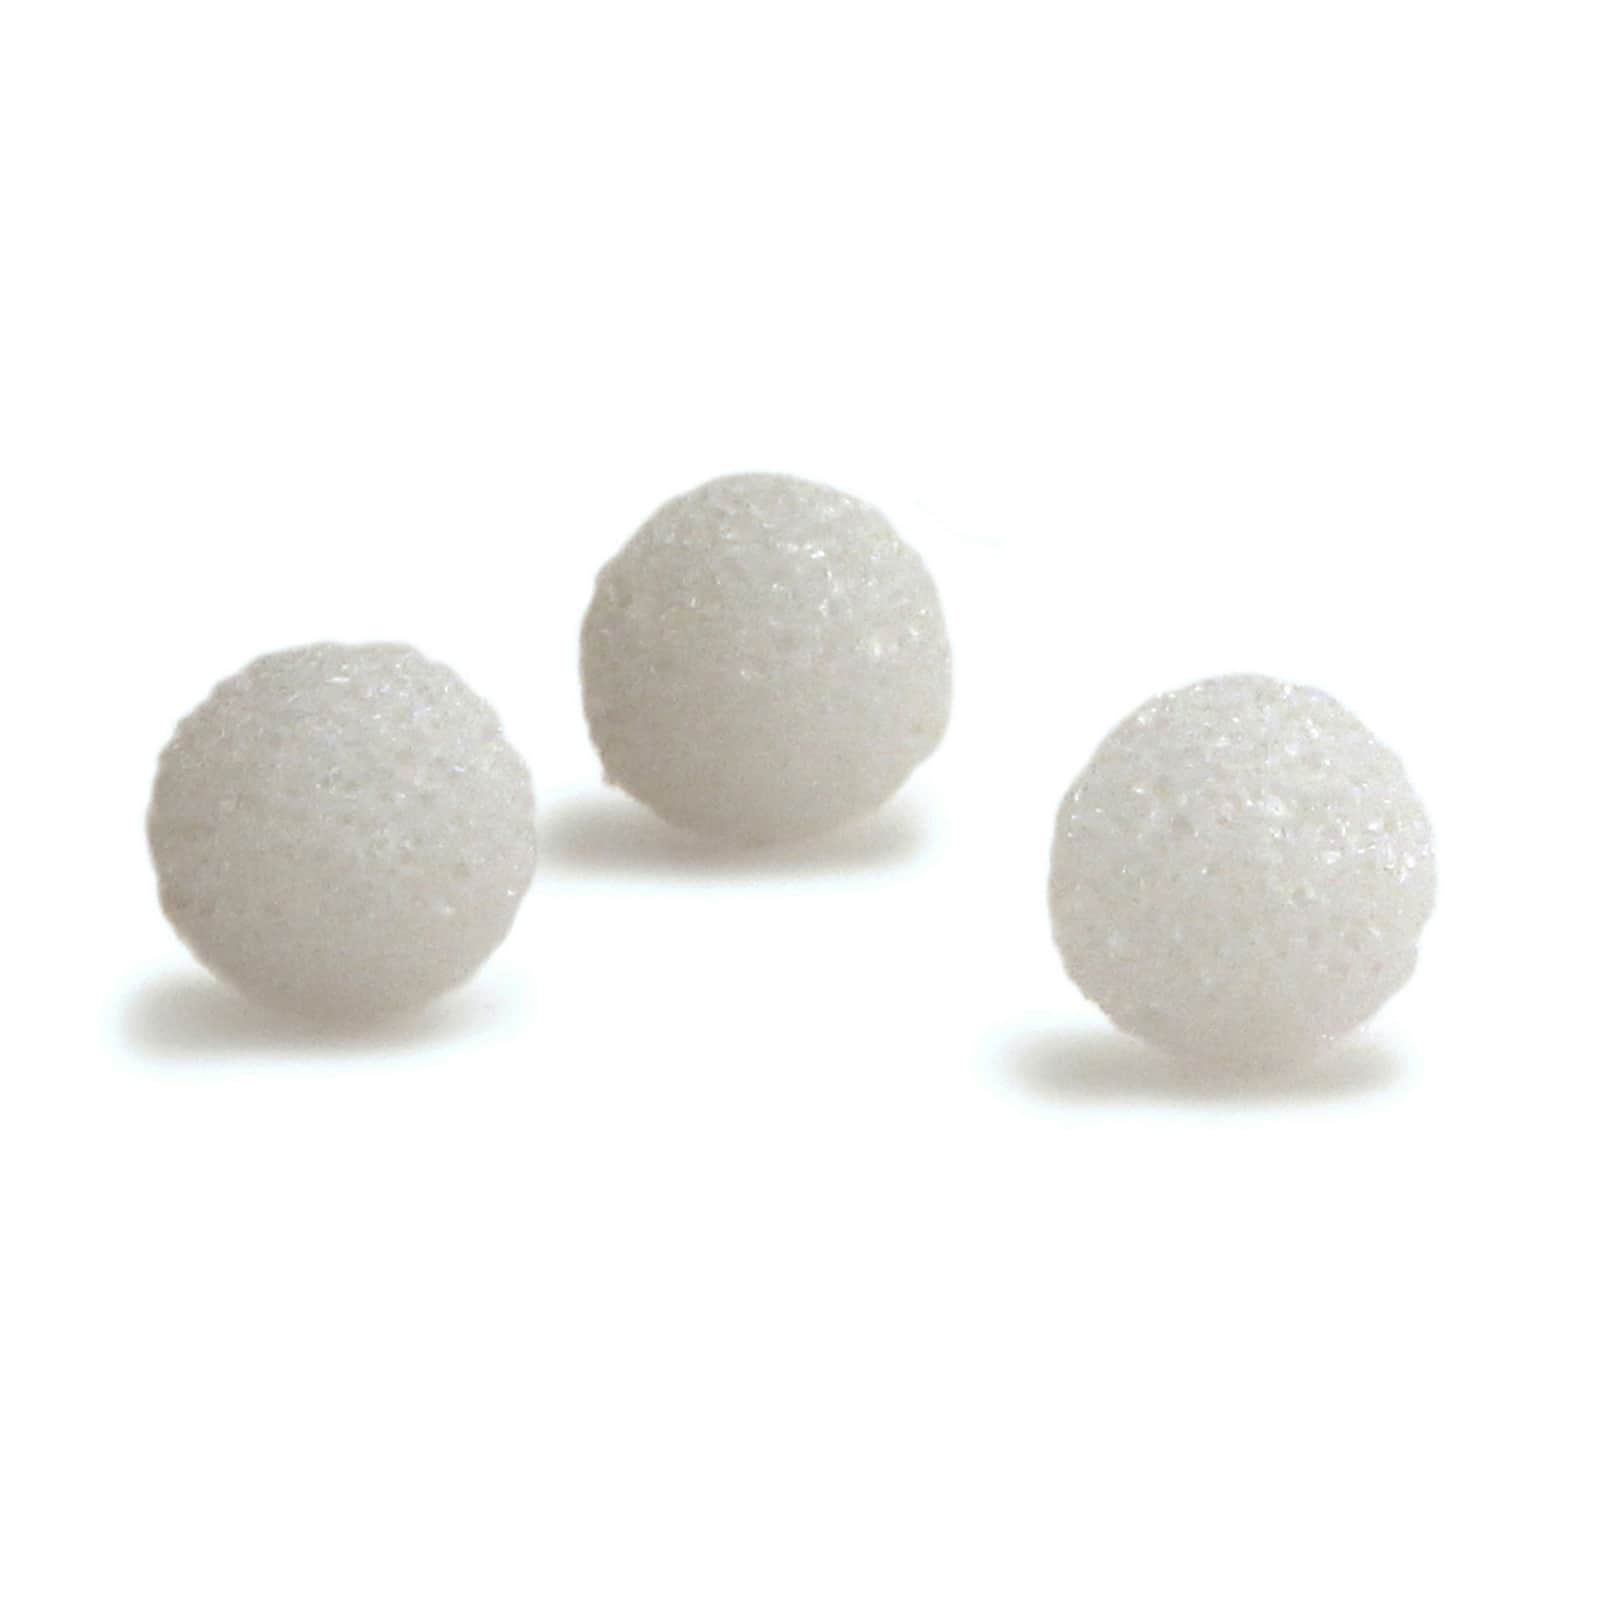 Hygloss&#xAE; 1&#x22; Craft Foam Balls, 6 Packs of 12